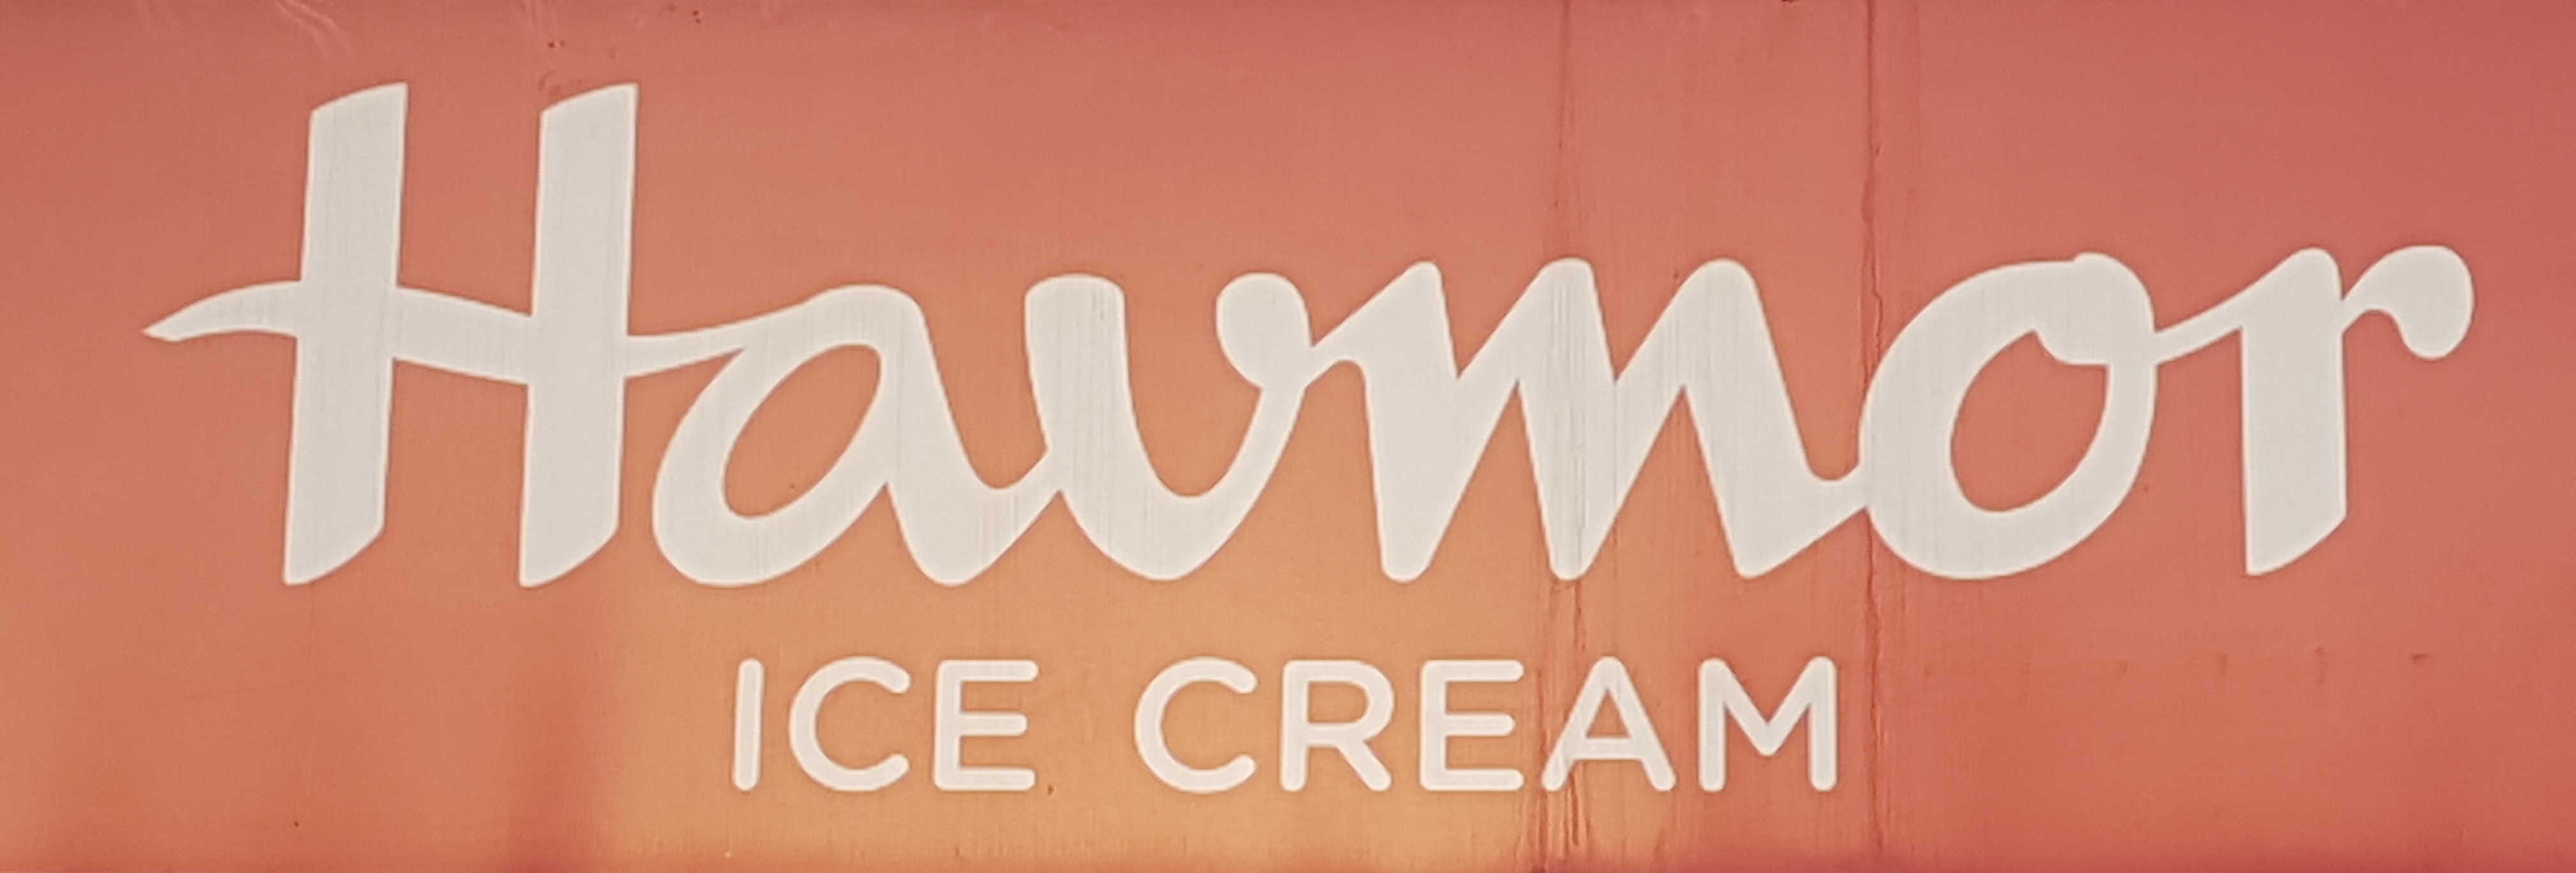 Alternative dairy gelato startup Mwah! purchased | Dairy Processing